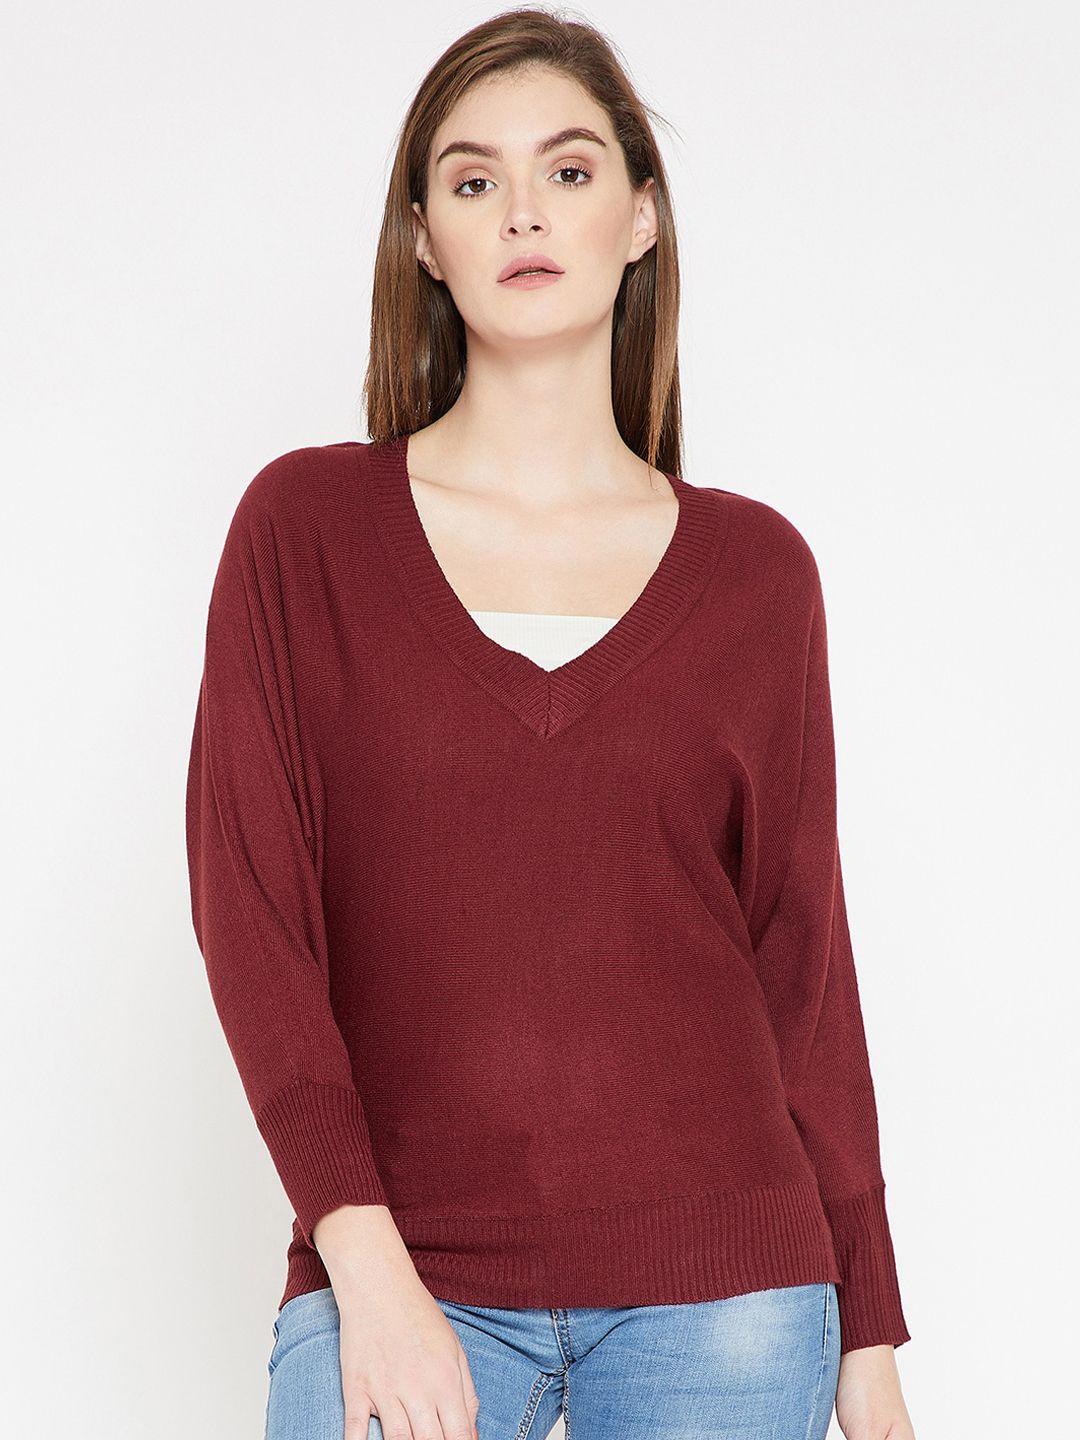 carlton london women maroon solid pullover sweater